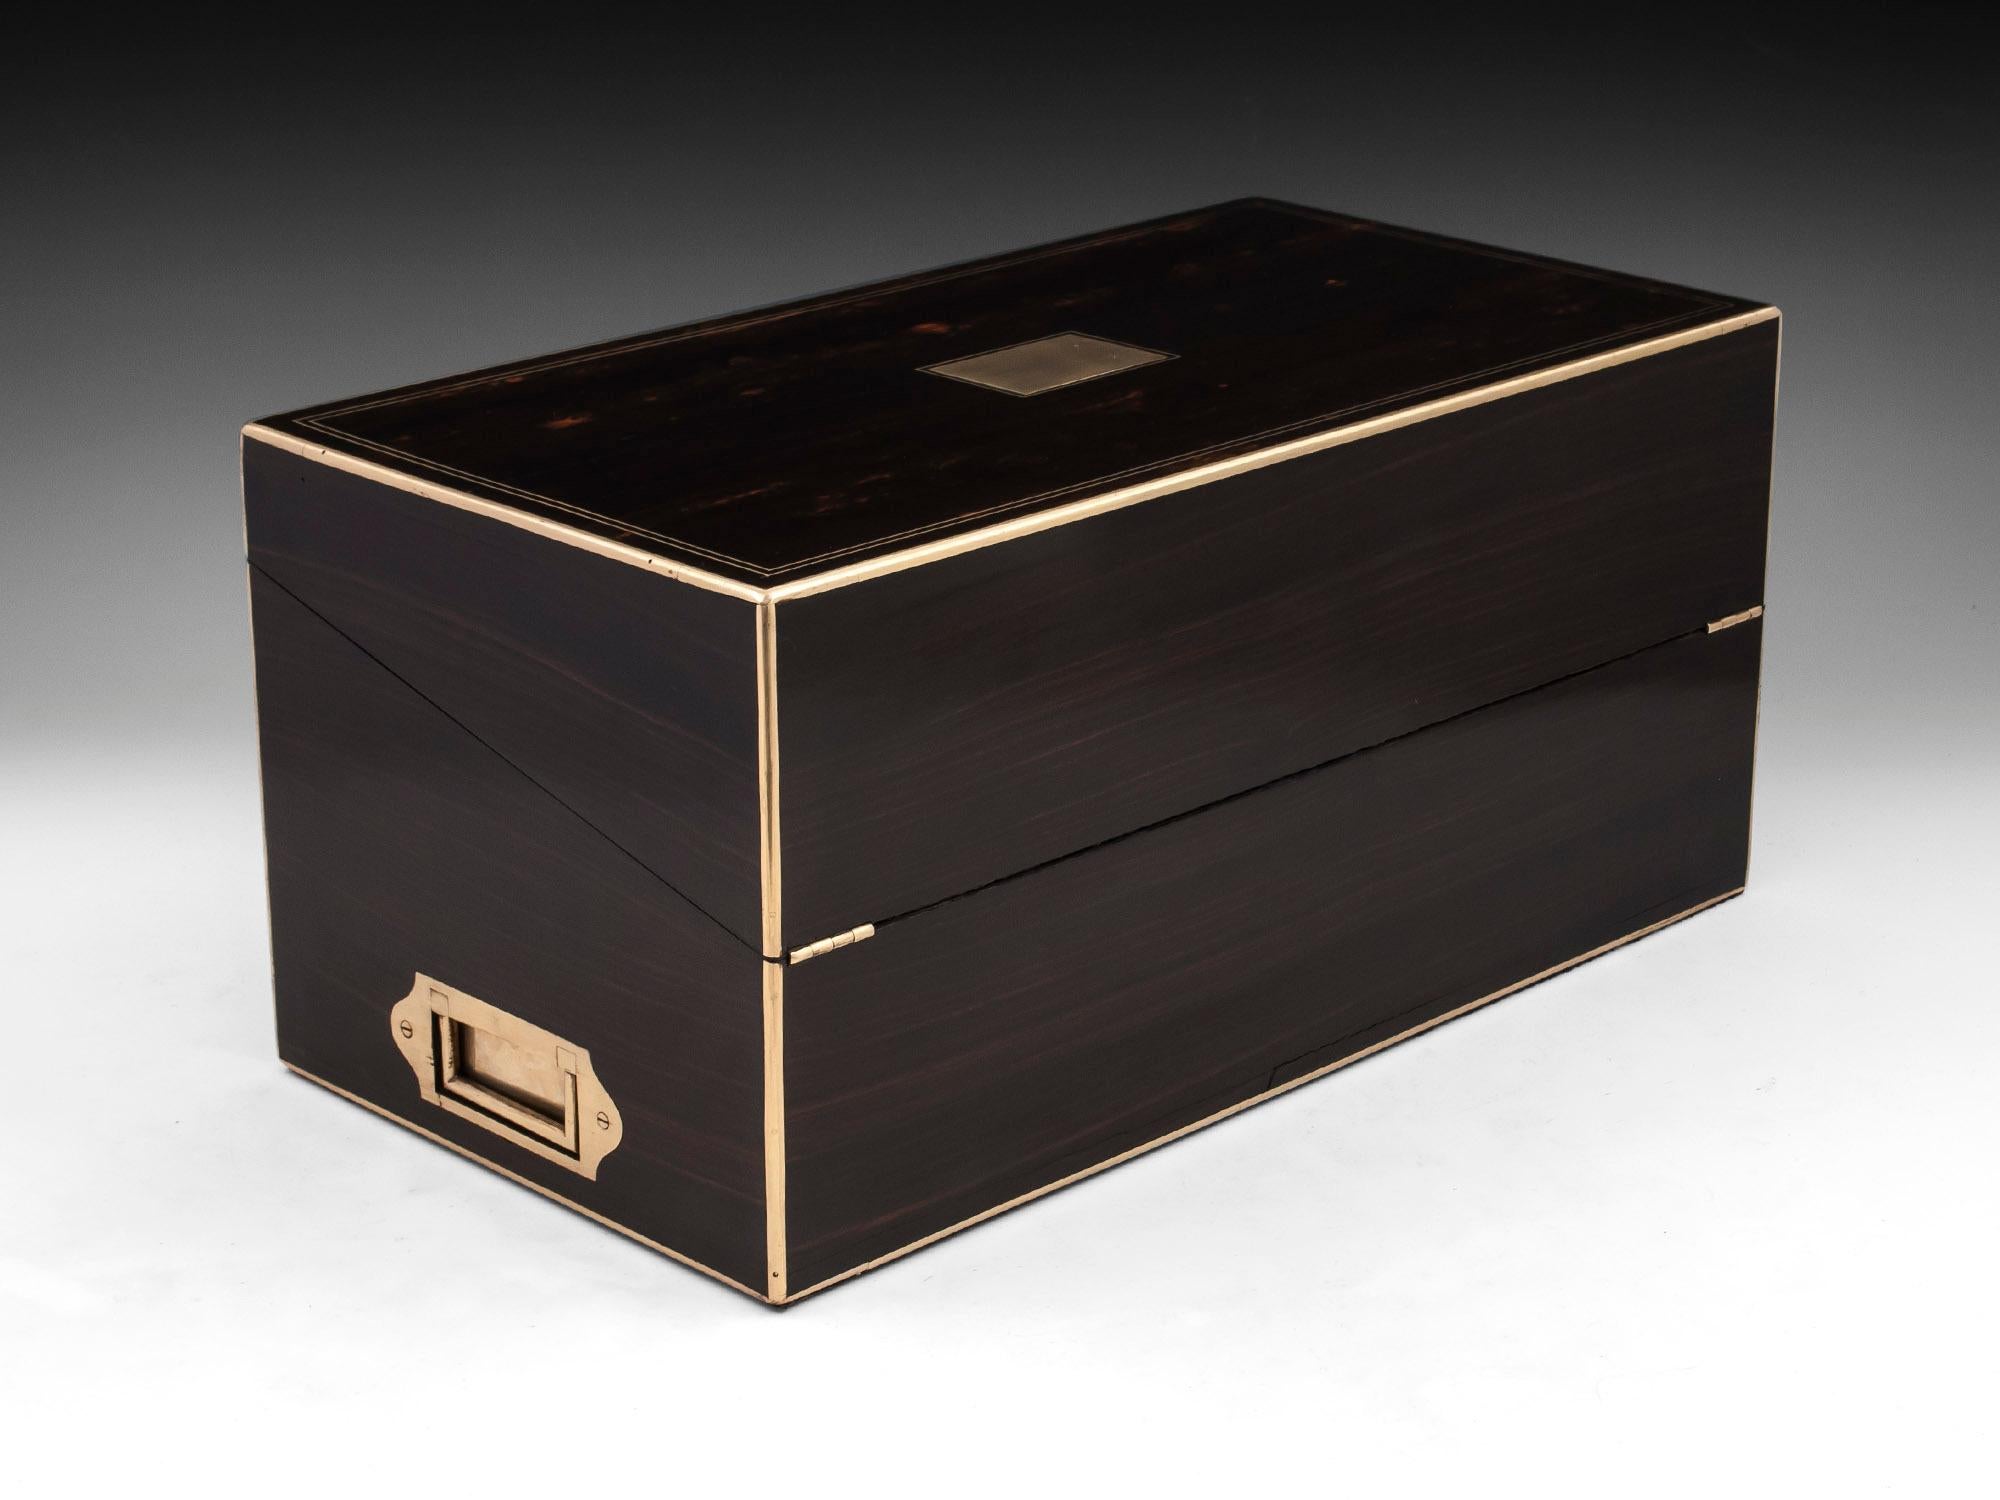 19th Century Antique Brass Bound Coromandel Writing Box with Secret Compartments